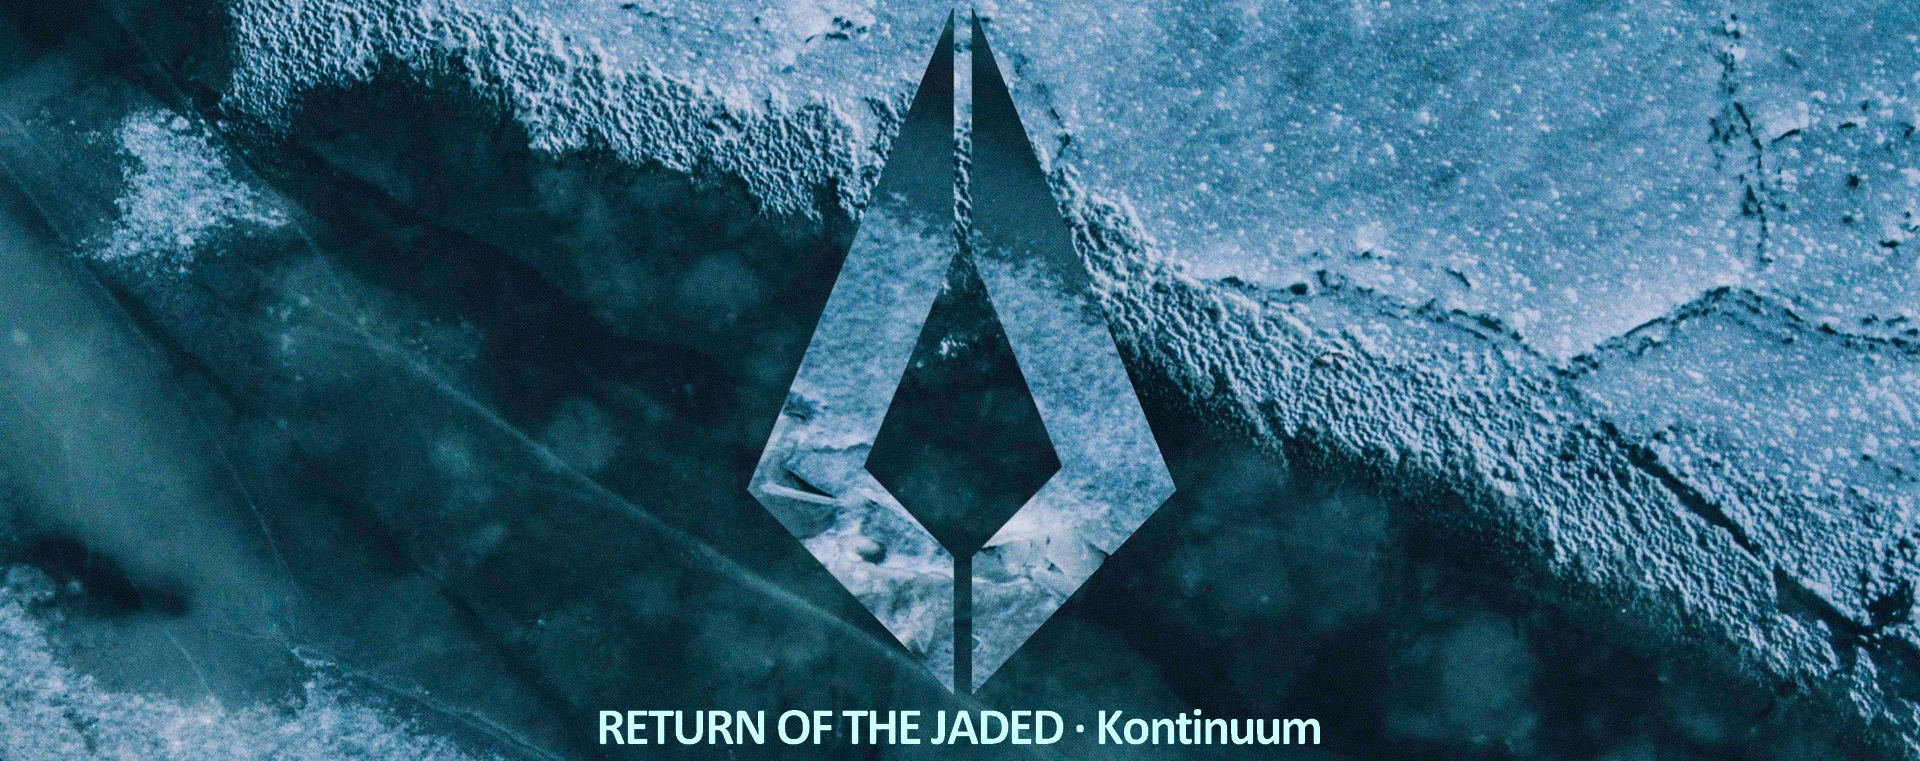 Return of the Jaded